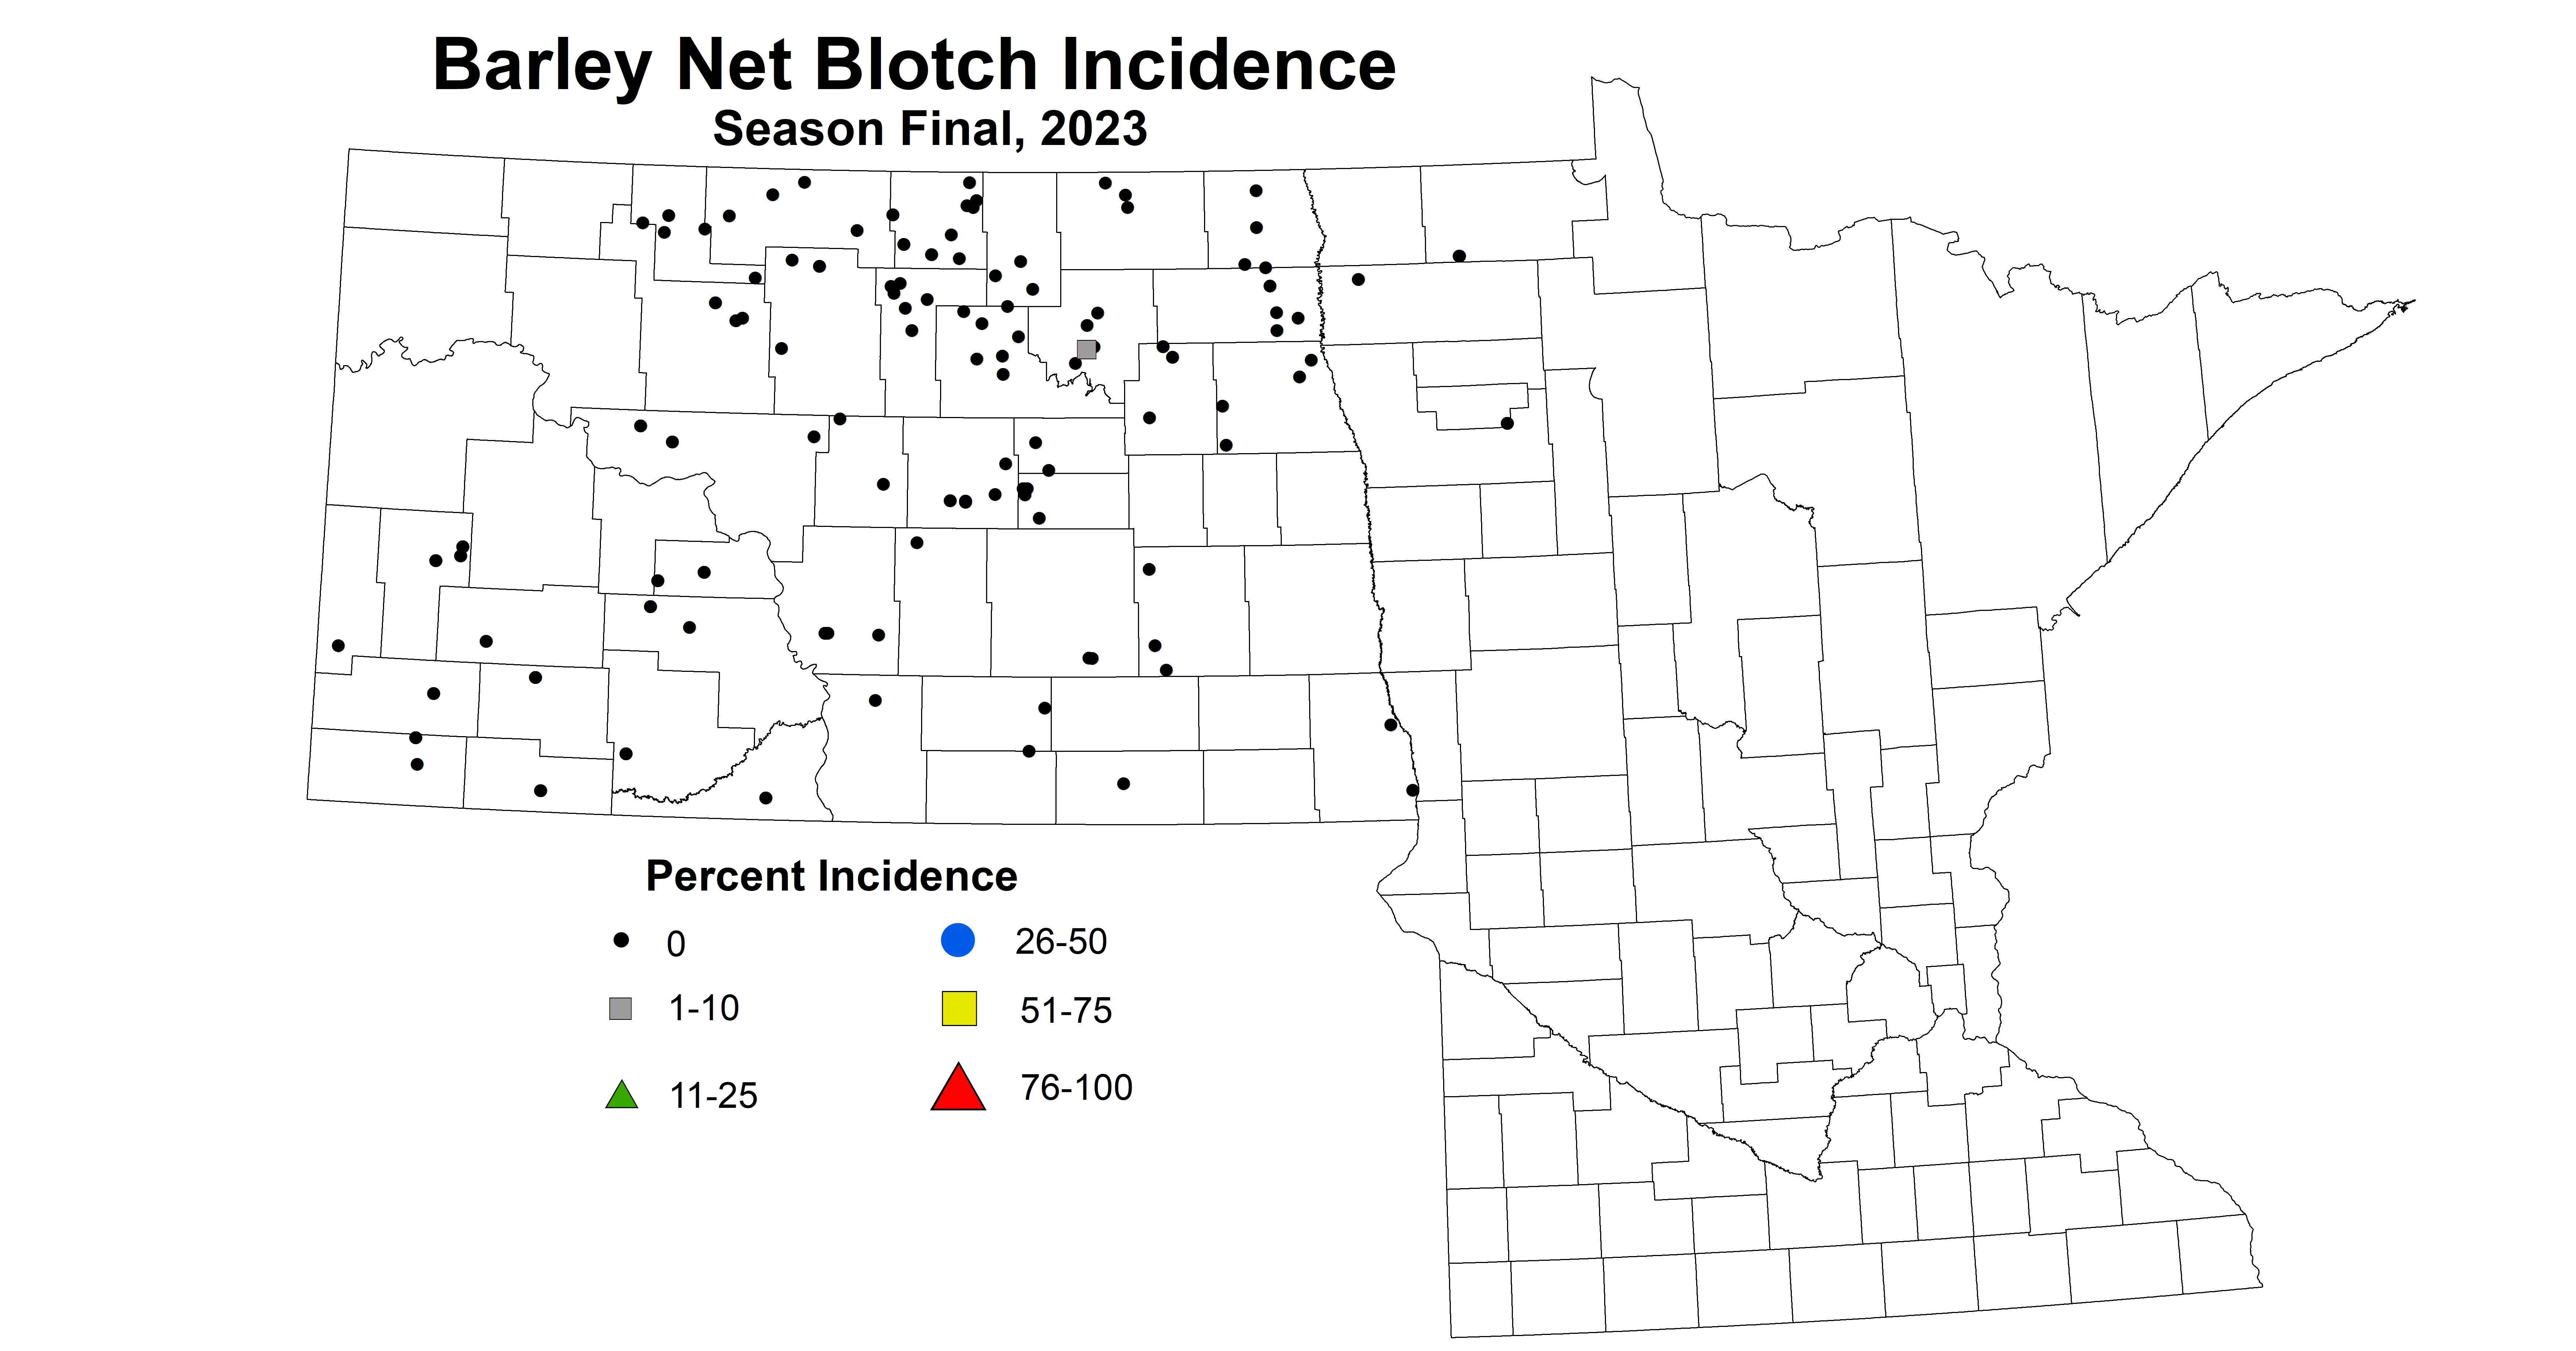 barley net blotch incidence season final 2023